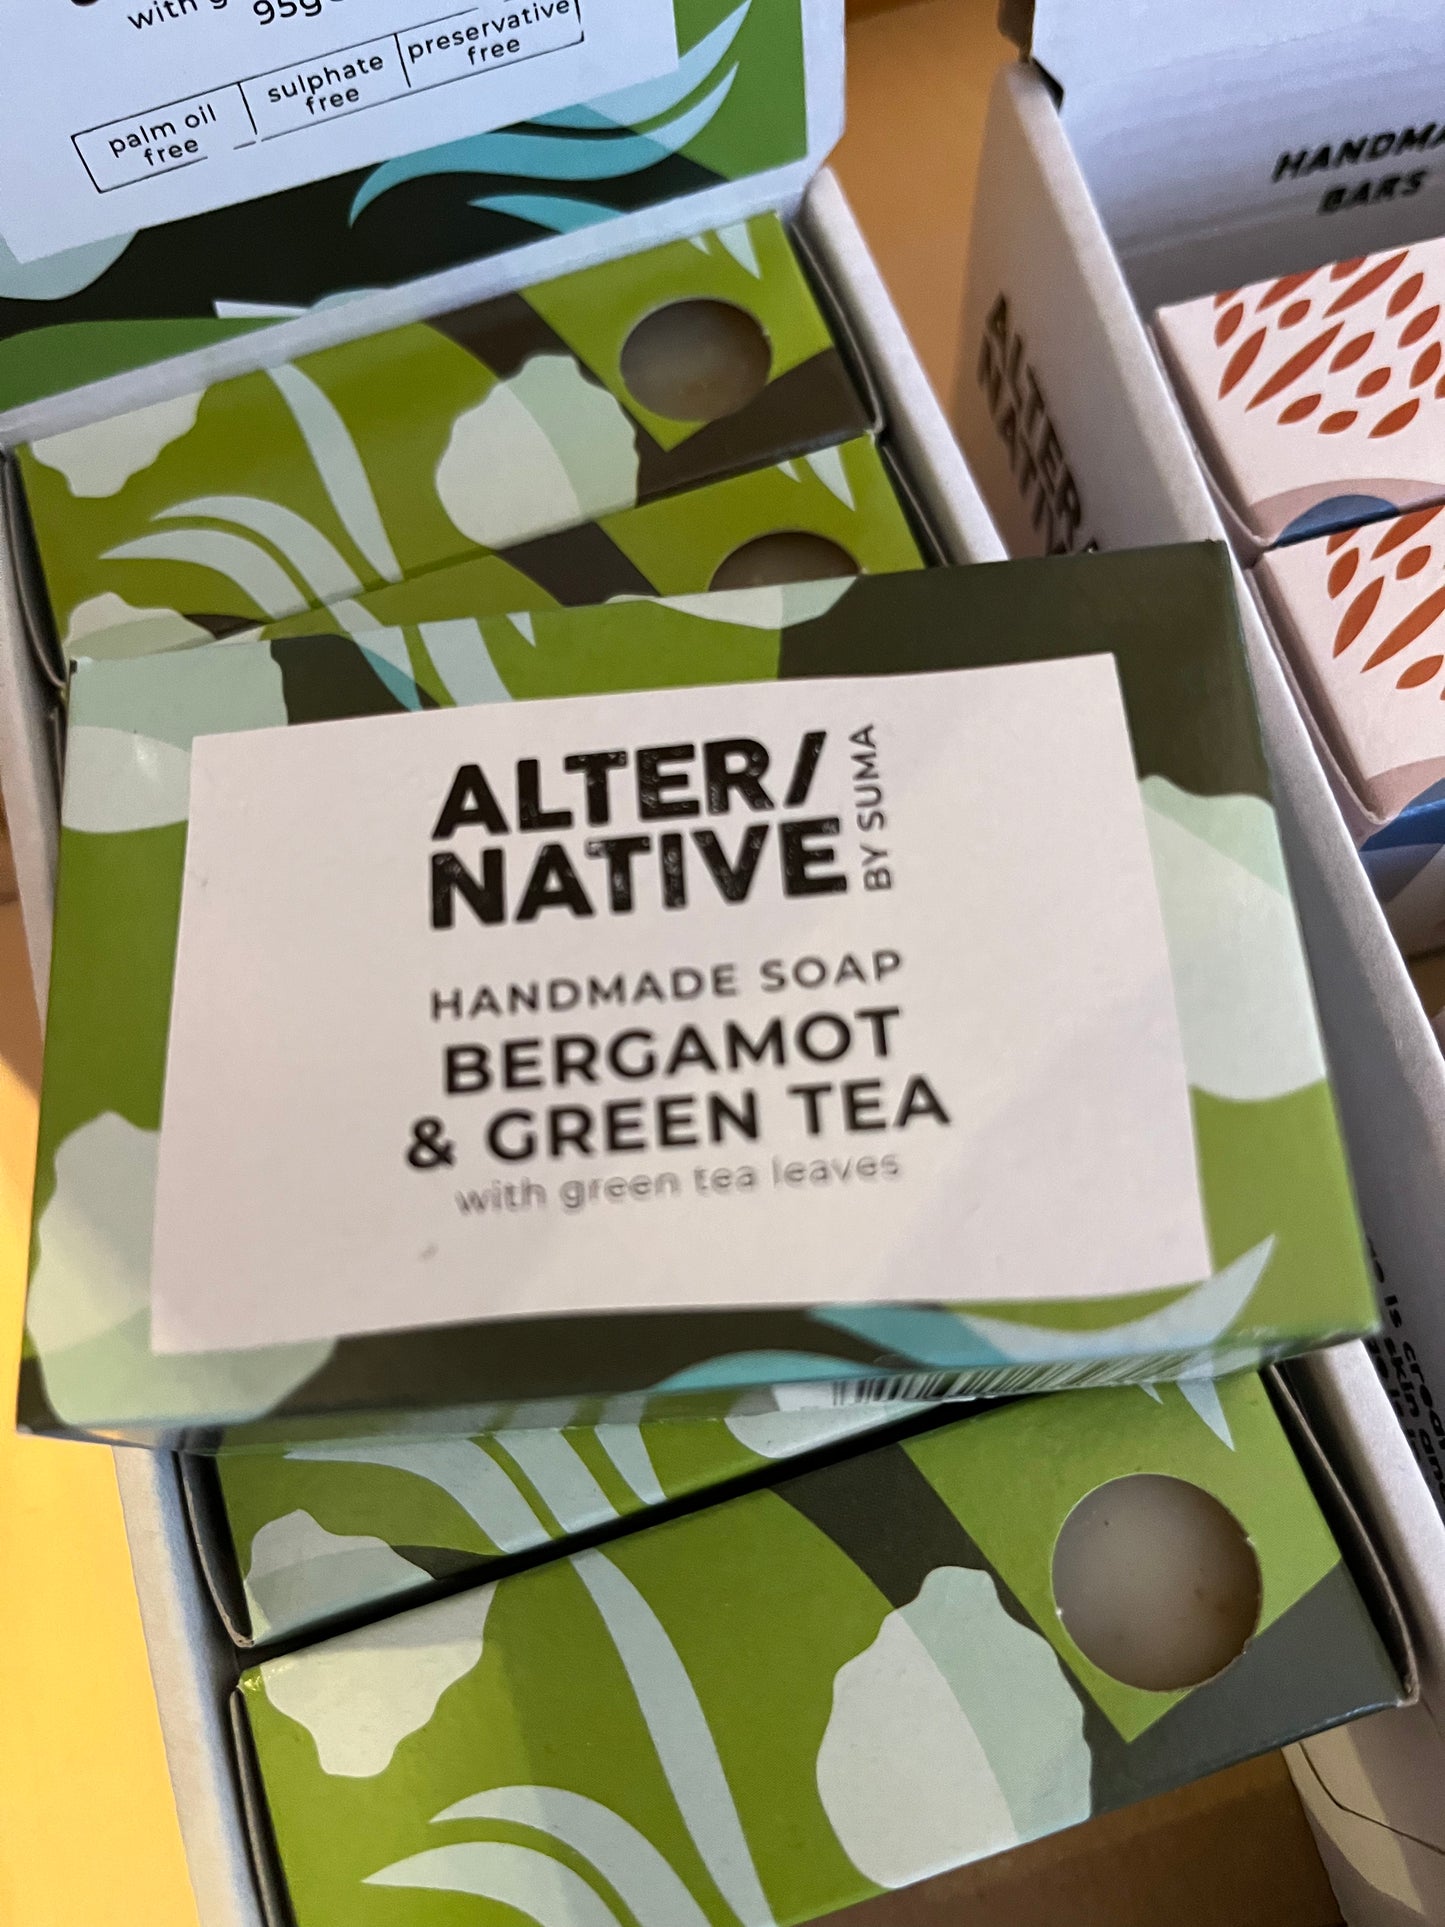 Alter/Native Soap Bar